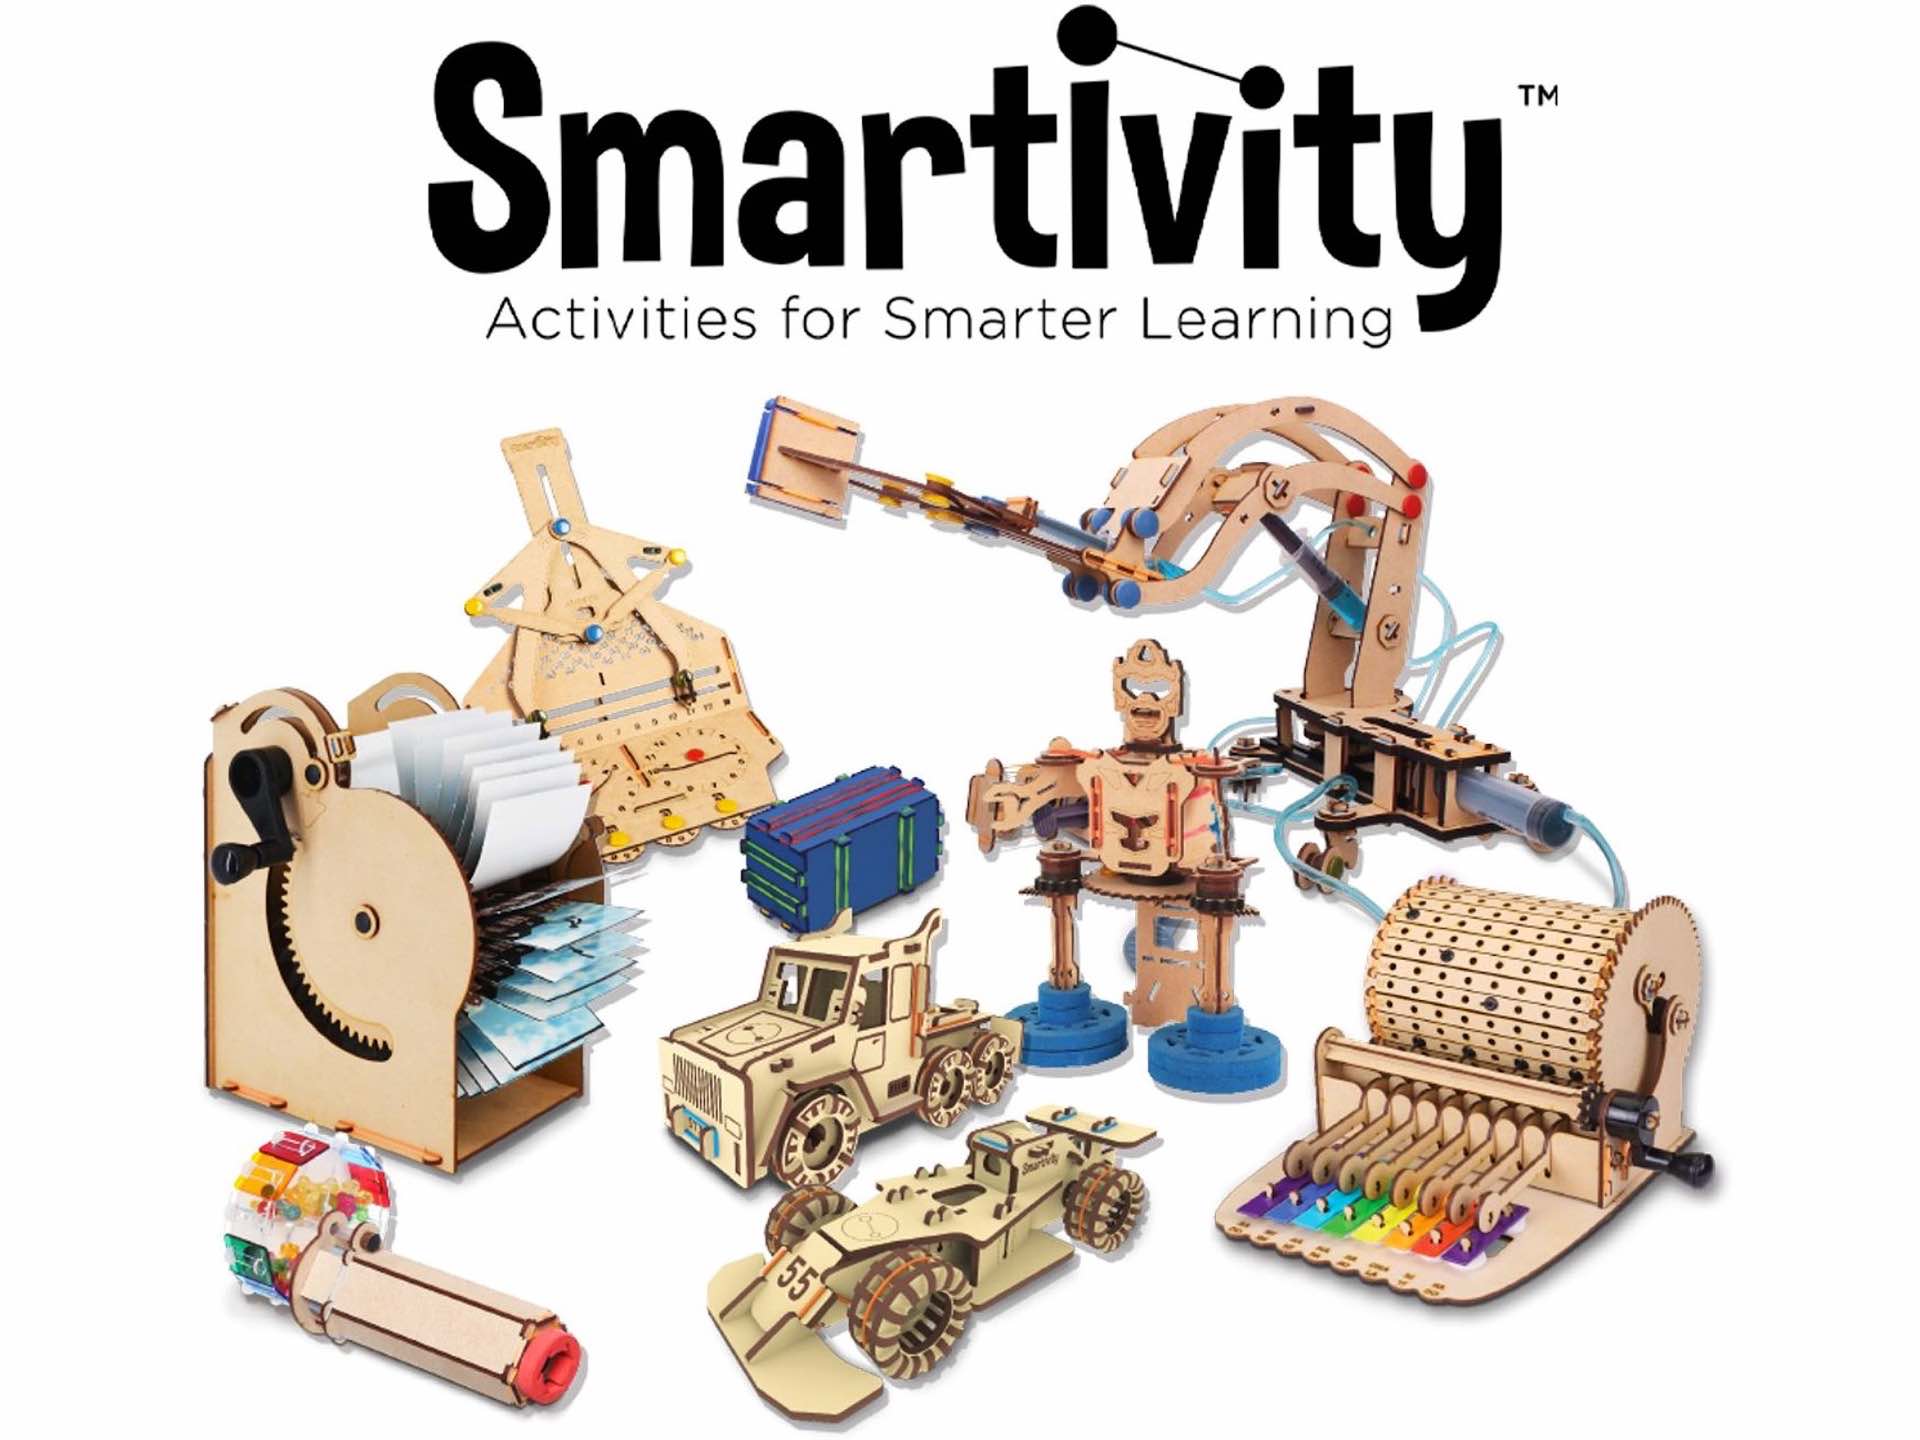 smartivity-steam-activity-kits